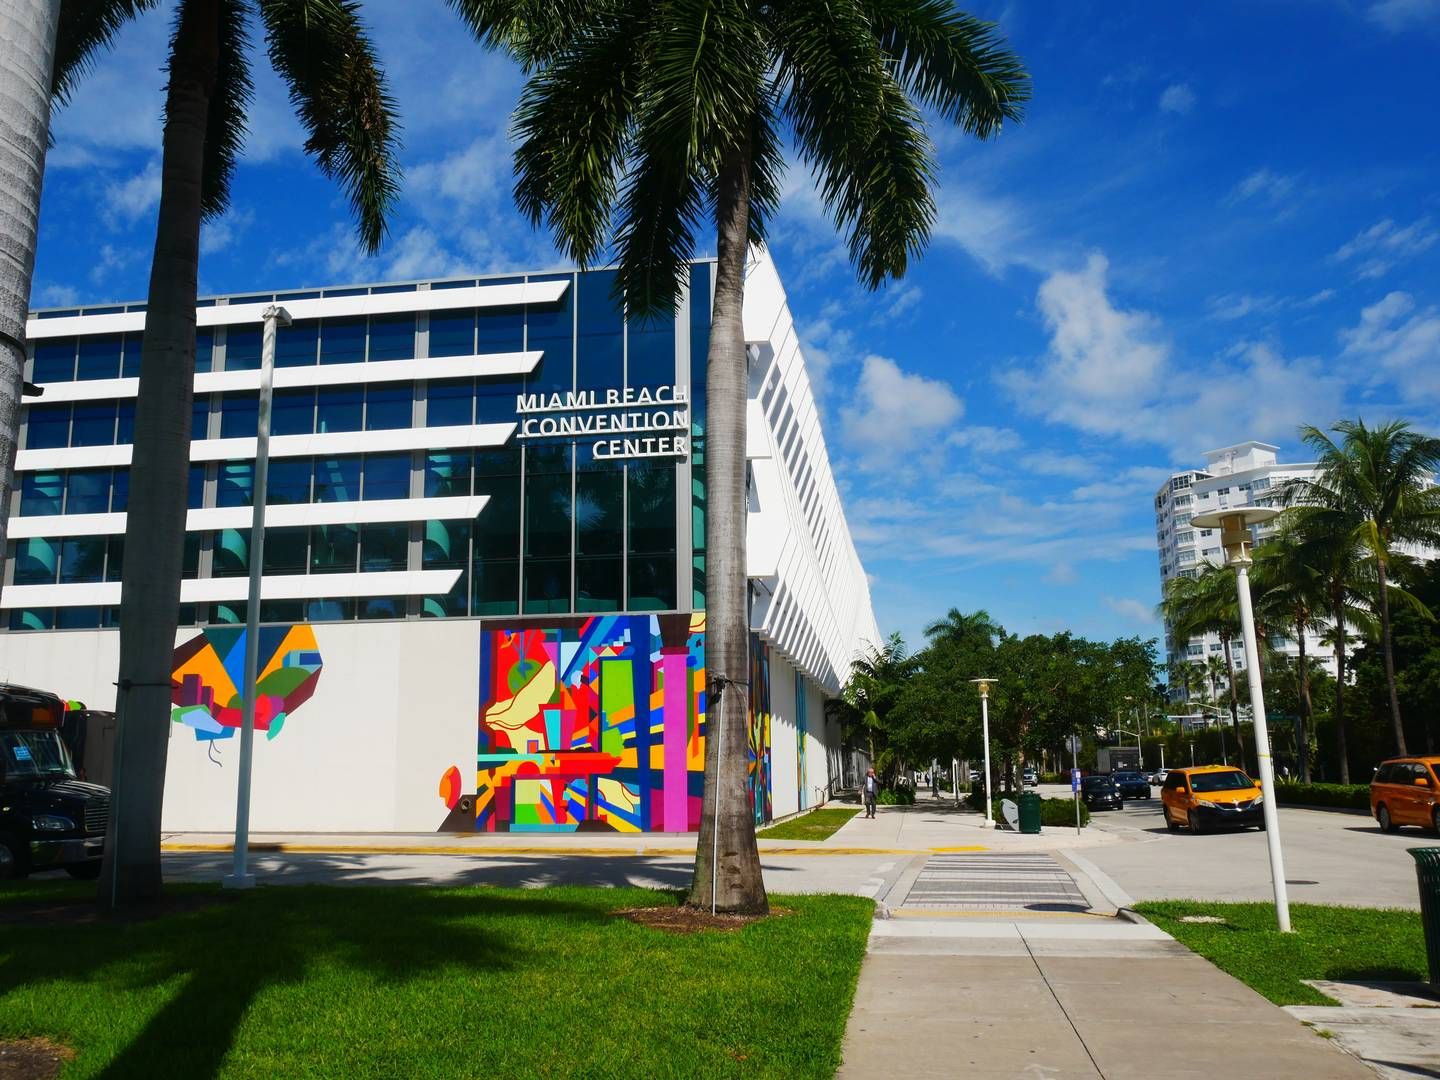 Miami Beach Convention Center lagde hus til årets IBA-konference. | Foto: Rasmus Fredsted